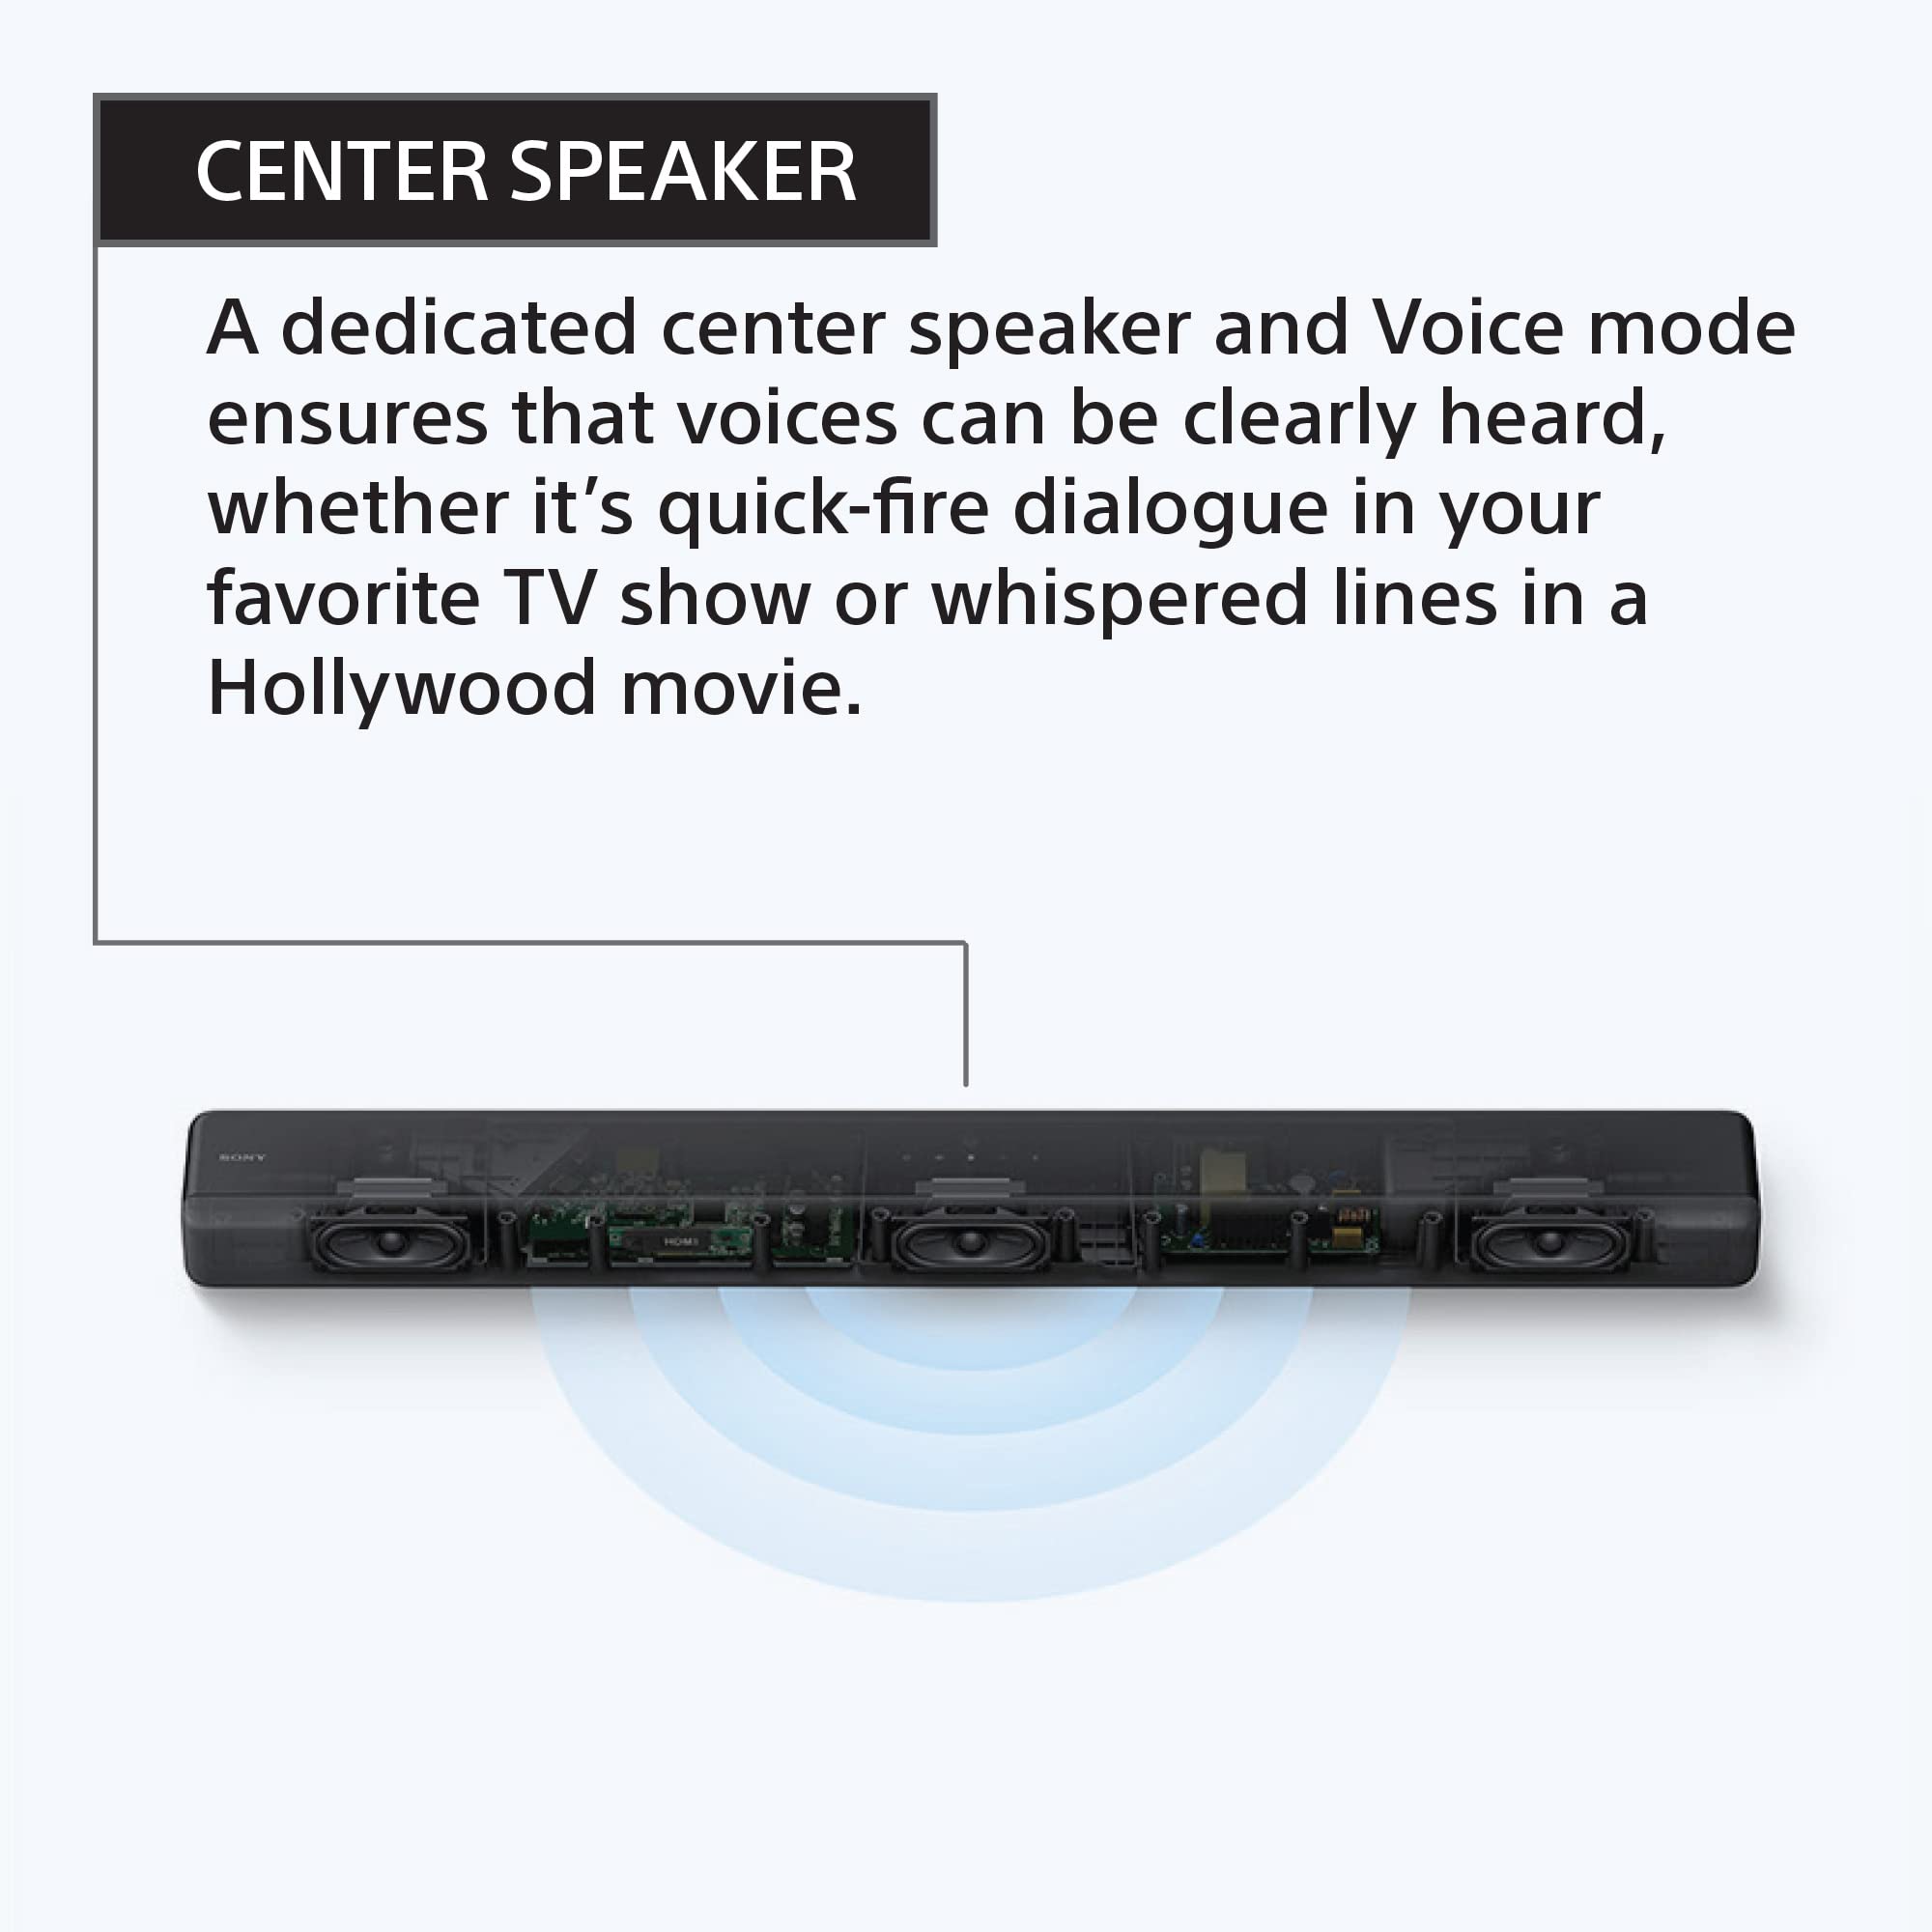 Sony HT-G700: 3.1CH Dolby Atmos/DTS:X Soundbar with Bluetooth Technology, Black